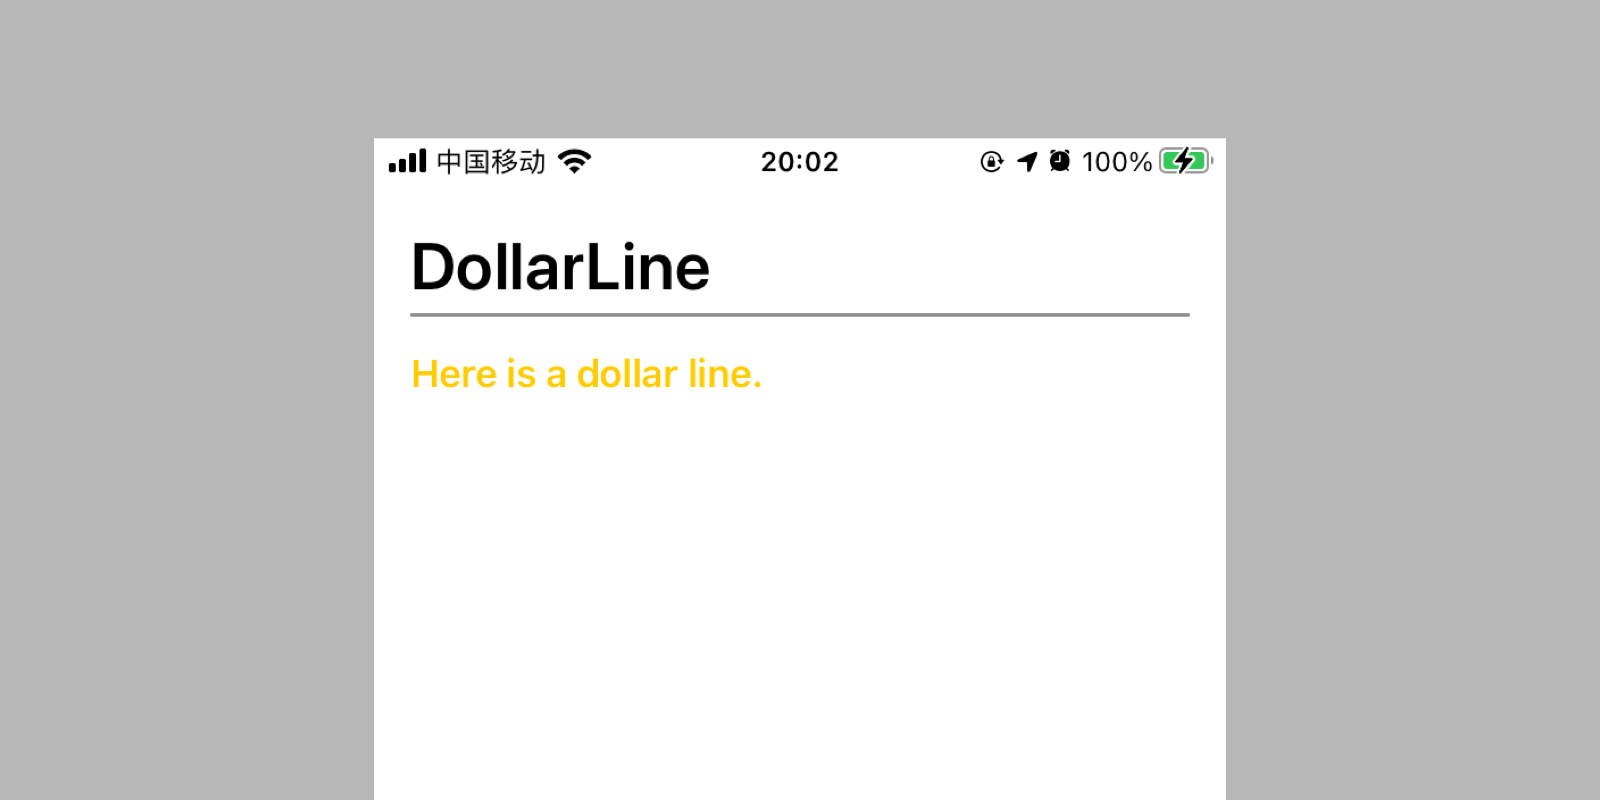 Dollar line